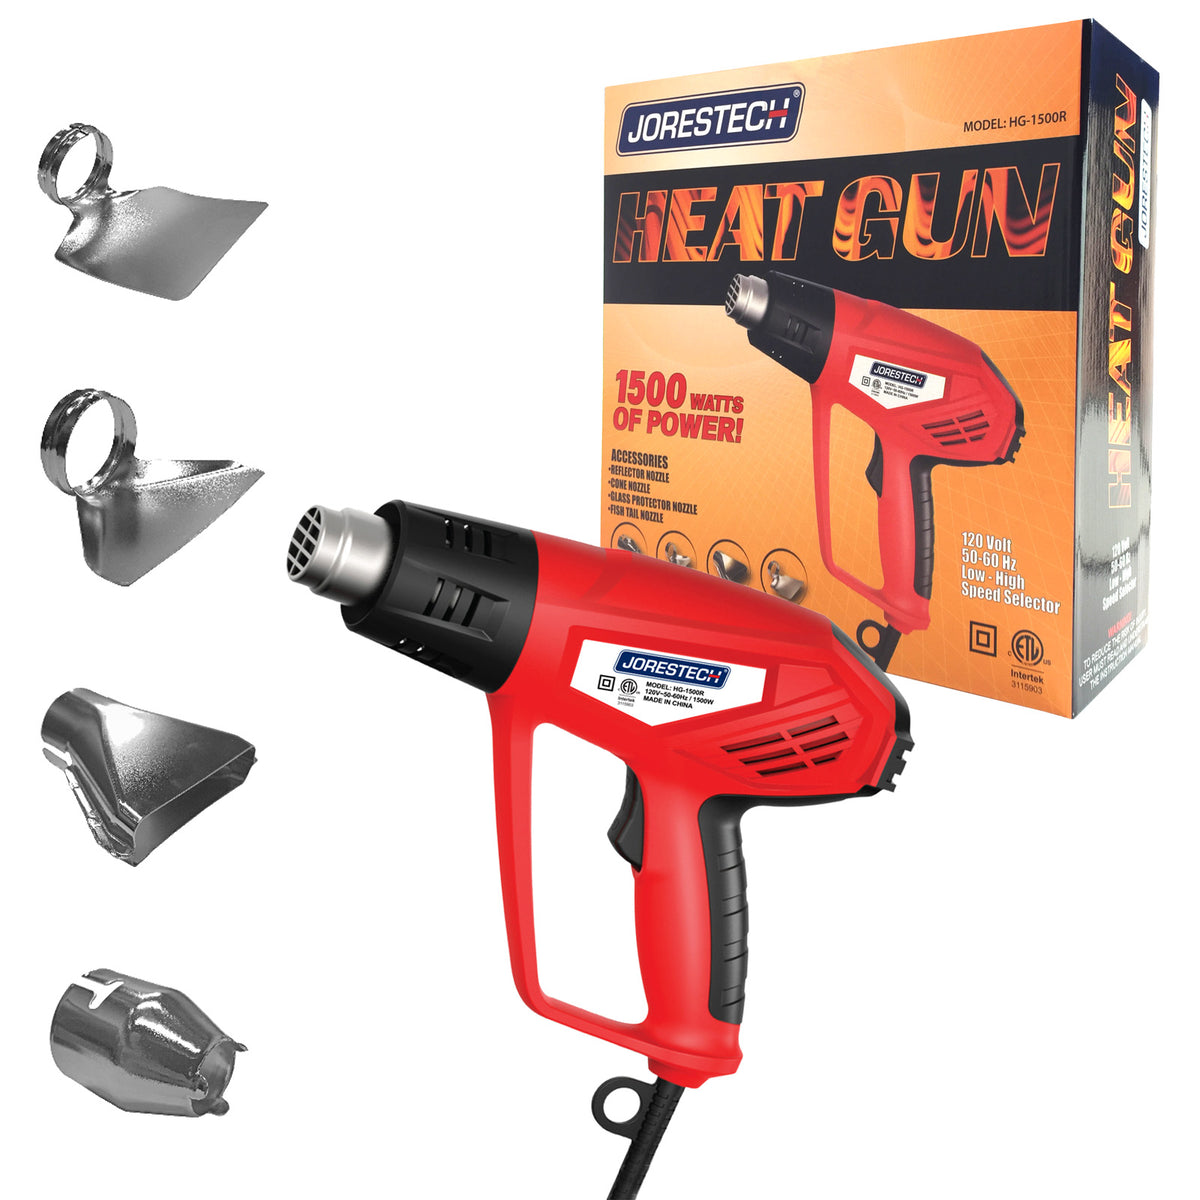 Heat gun for heat-shrink tubing